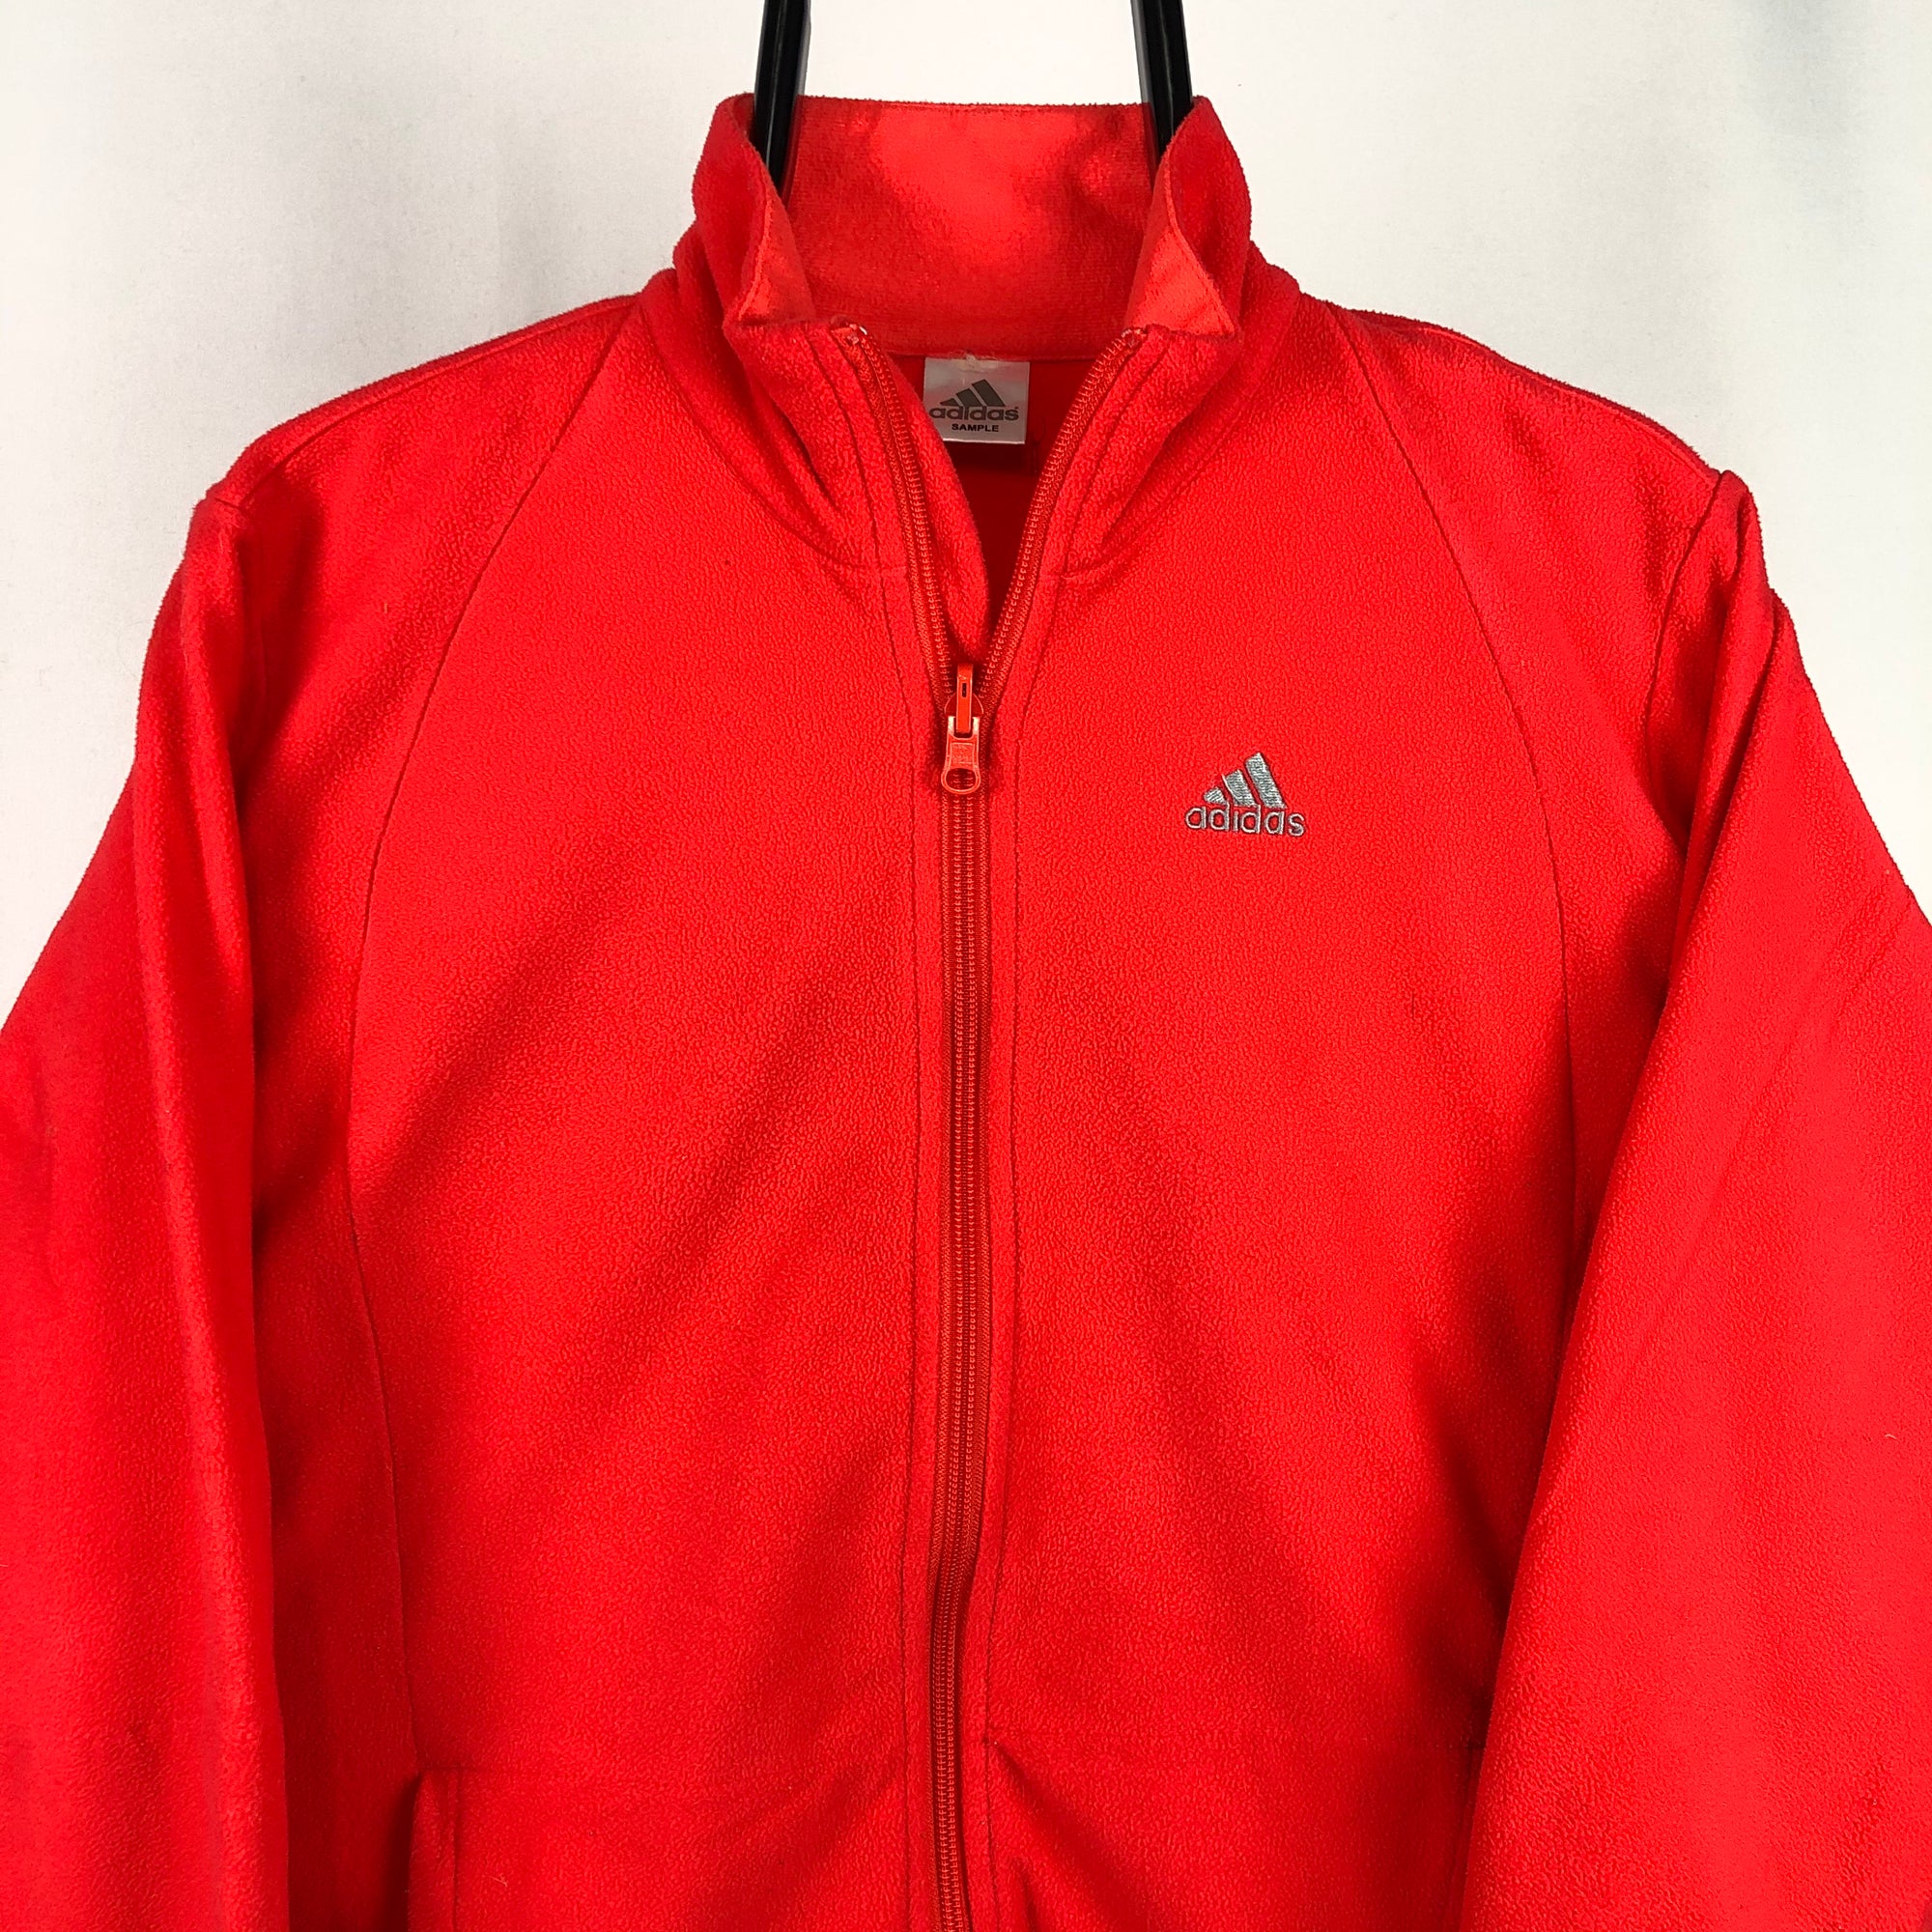 Adidas Neon Red Sample Fleece - Men's Small/Women's Medium